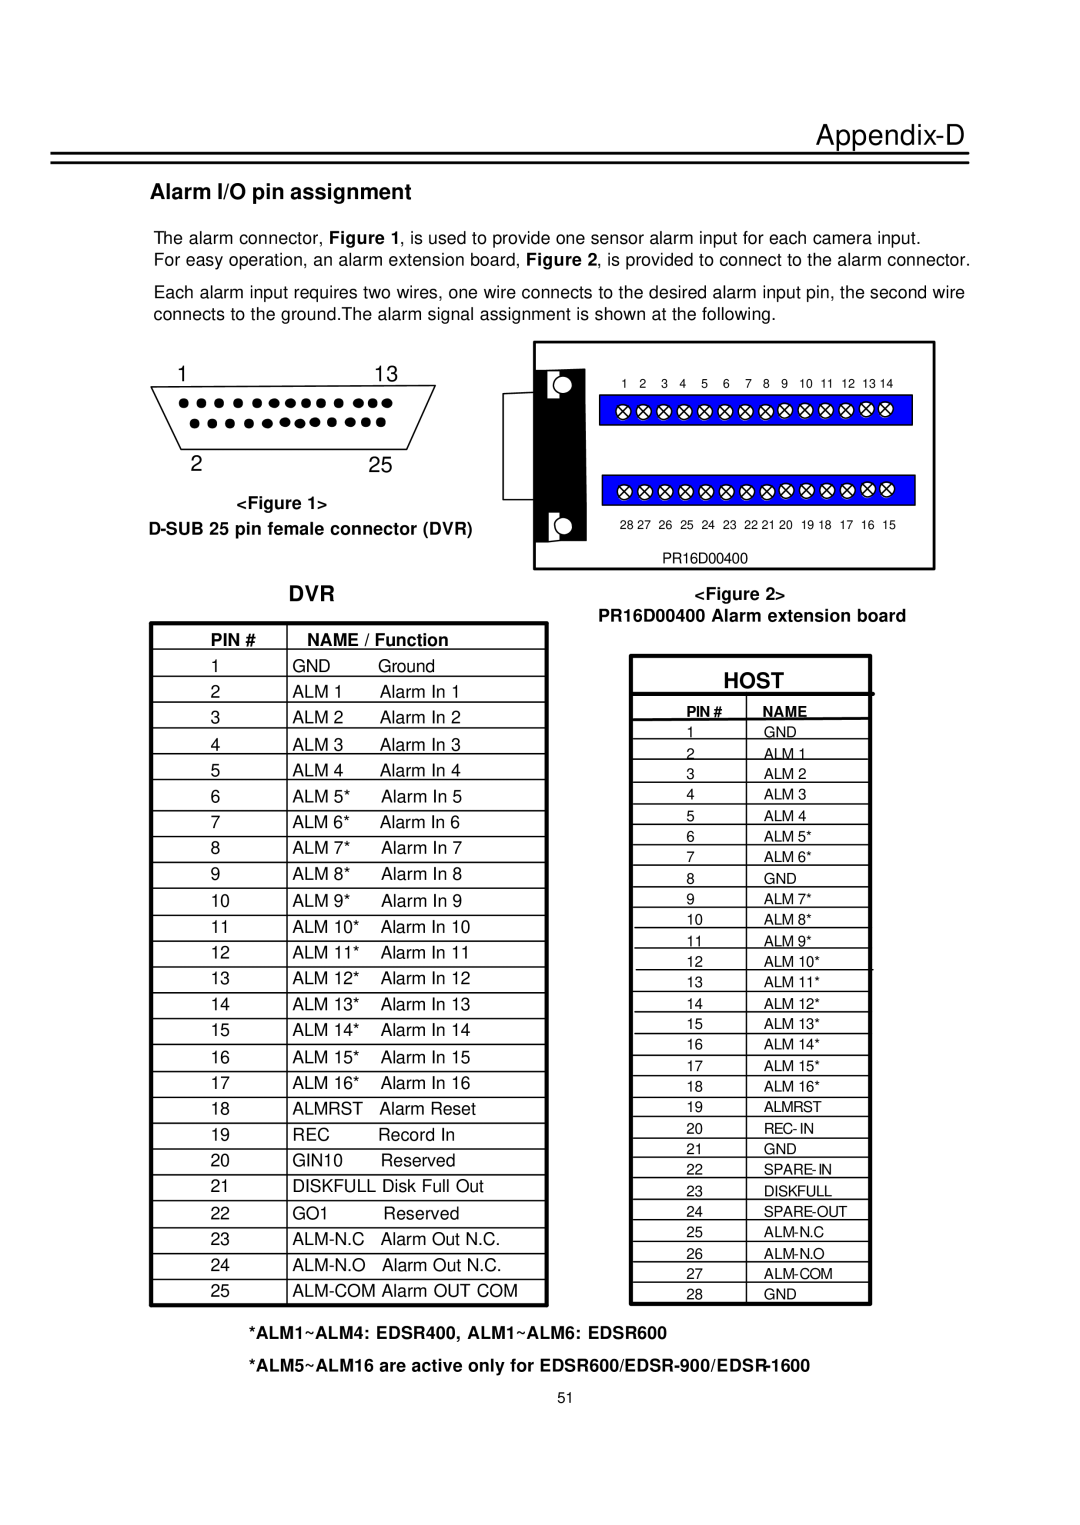 EverFocus EDSR-400 Appendix-D, Alarm I/O pin assignment, Host, D-SUB 25 pin female connector DVR, Pin #, NAME / Function 